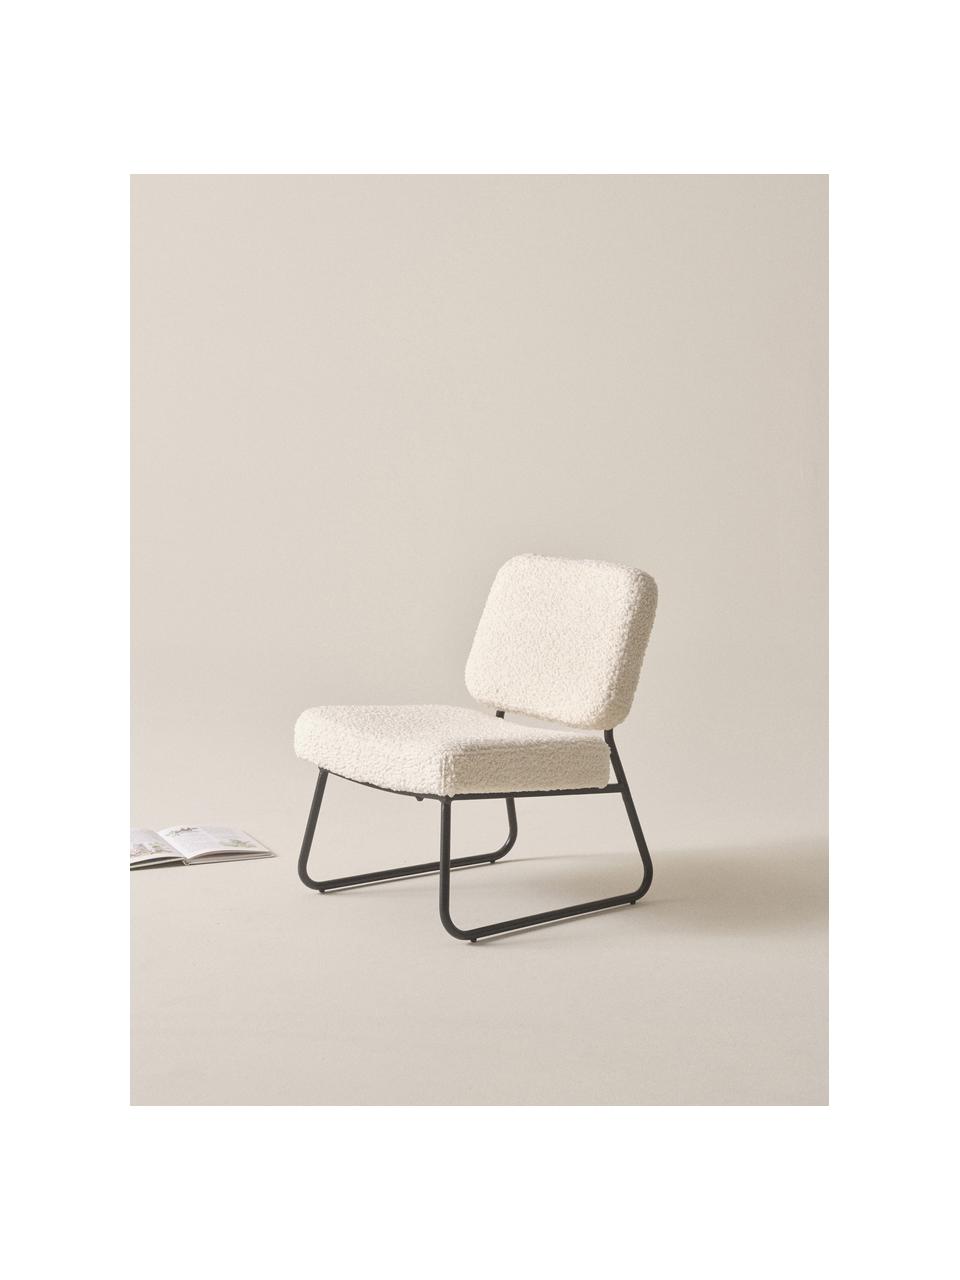 Plyšová dětská židle Bolzano Mini, Bílá, Š 52 cm, H 46 cm